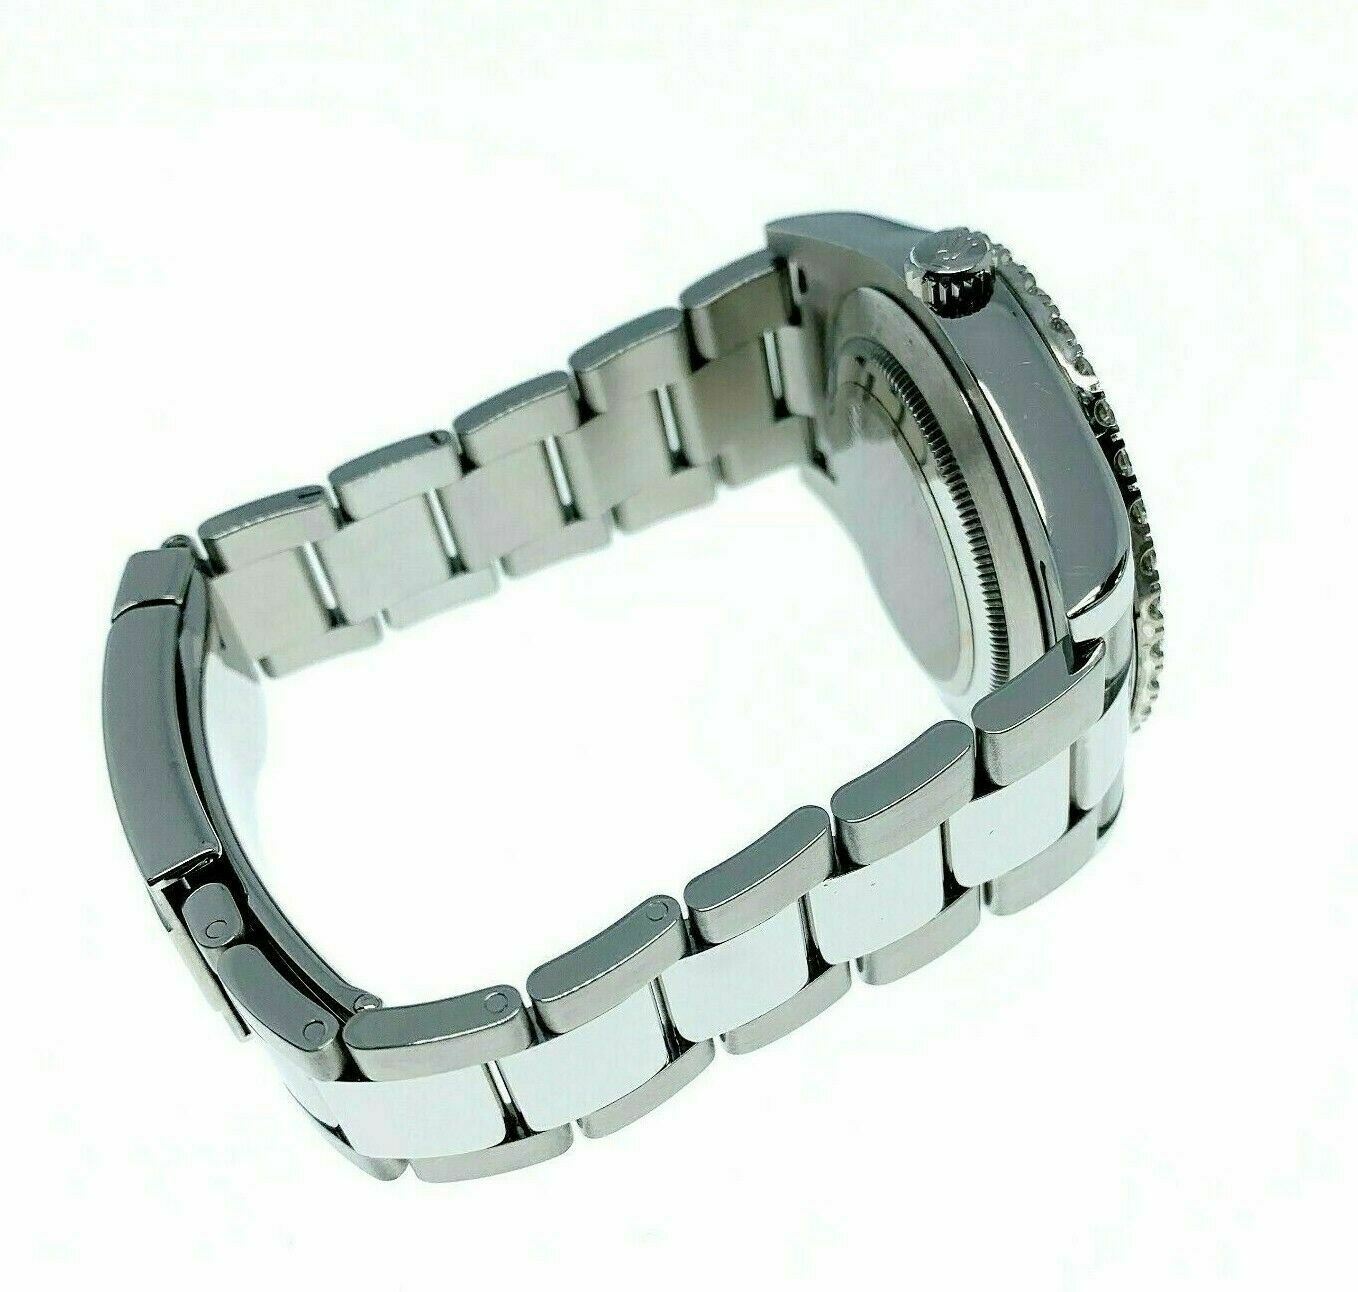 Rolex 41MM Datejust II Watch Stainless Steel Oyster Diamond Bezel Ref # 116300